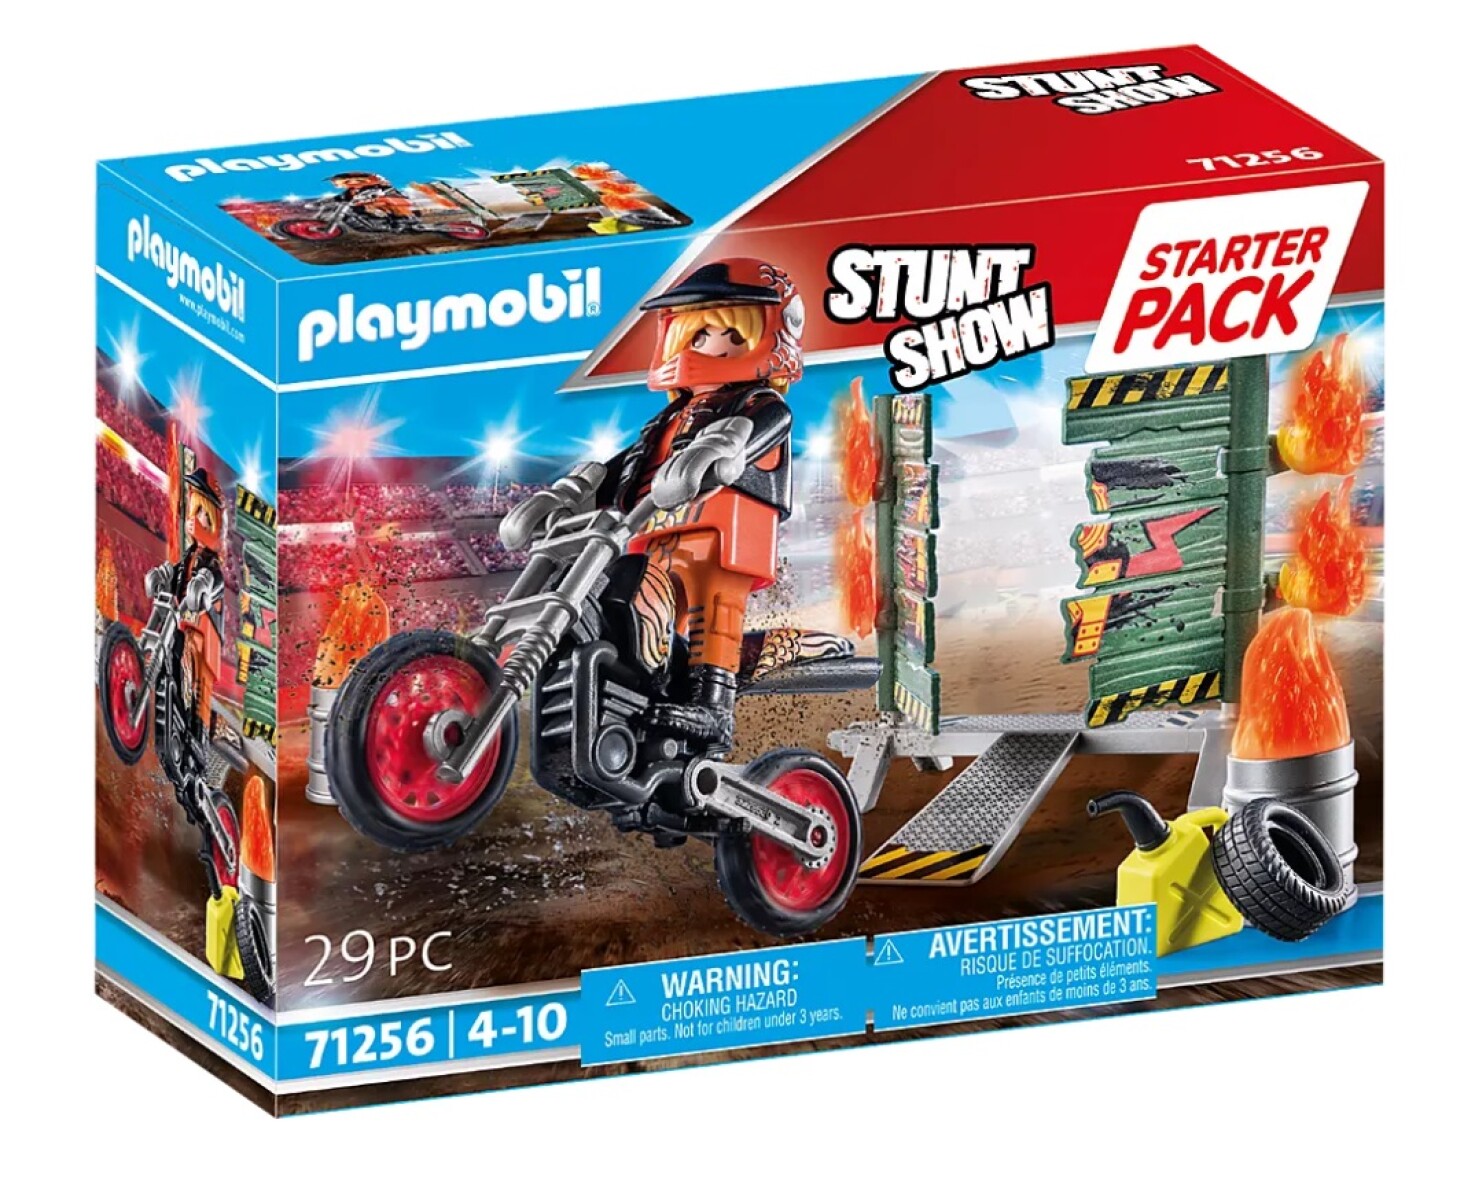 Set Playmobil Moto con Pared de Fuego Starter Pack - 001 